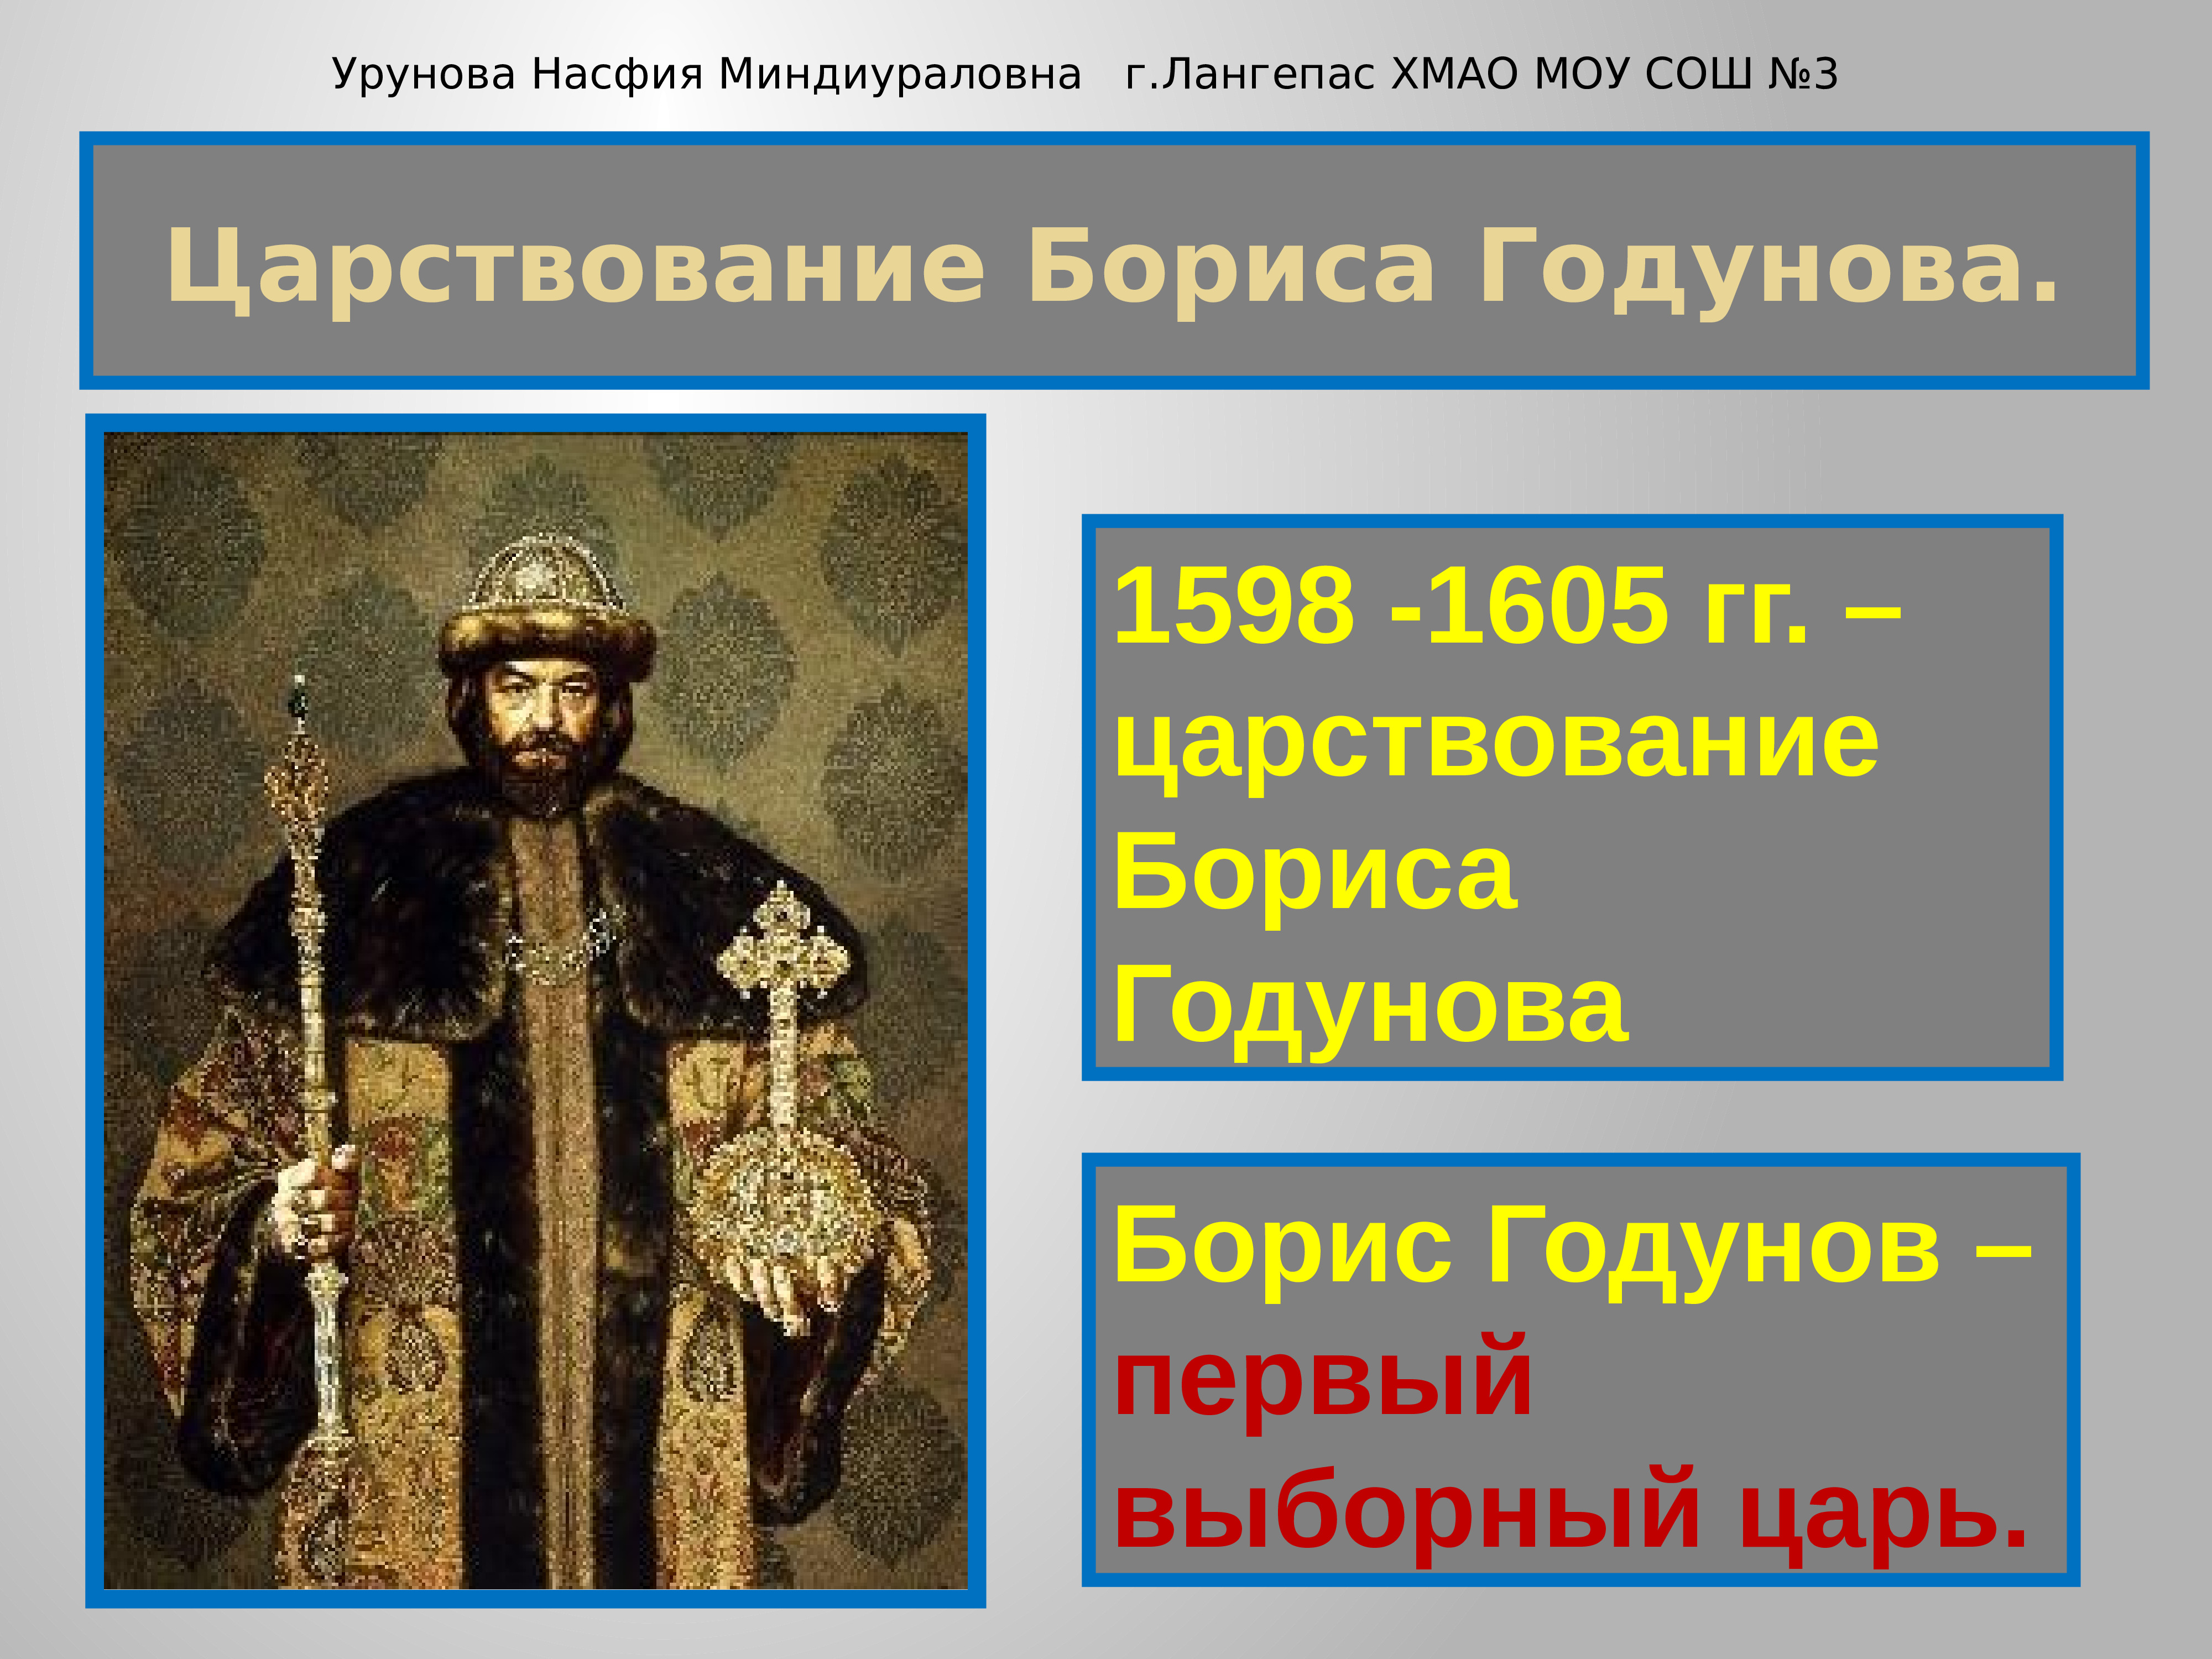 Год начала бориса годунова. Правление Бориса Годунова 1598-1605. 1598 – 1605 – Царствование Бориса Годунова.